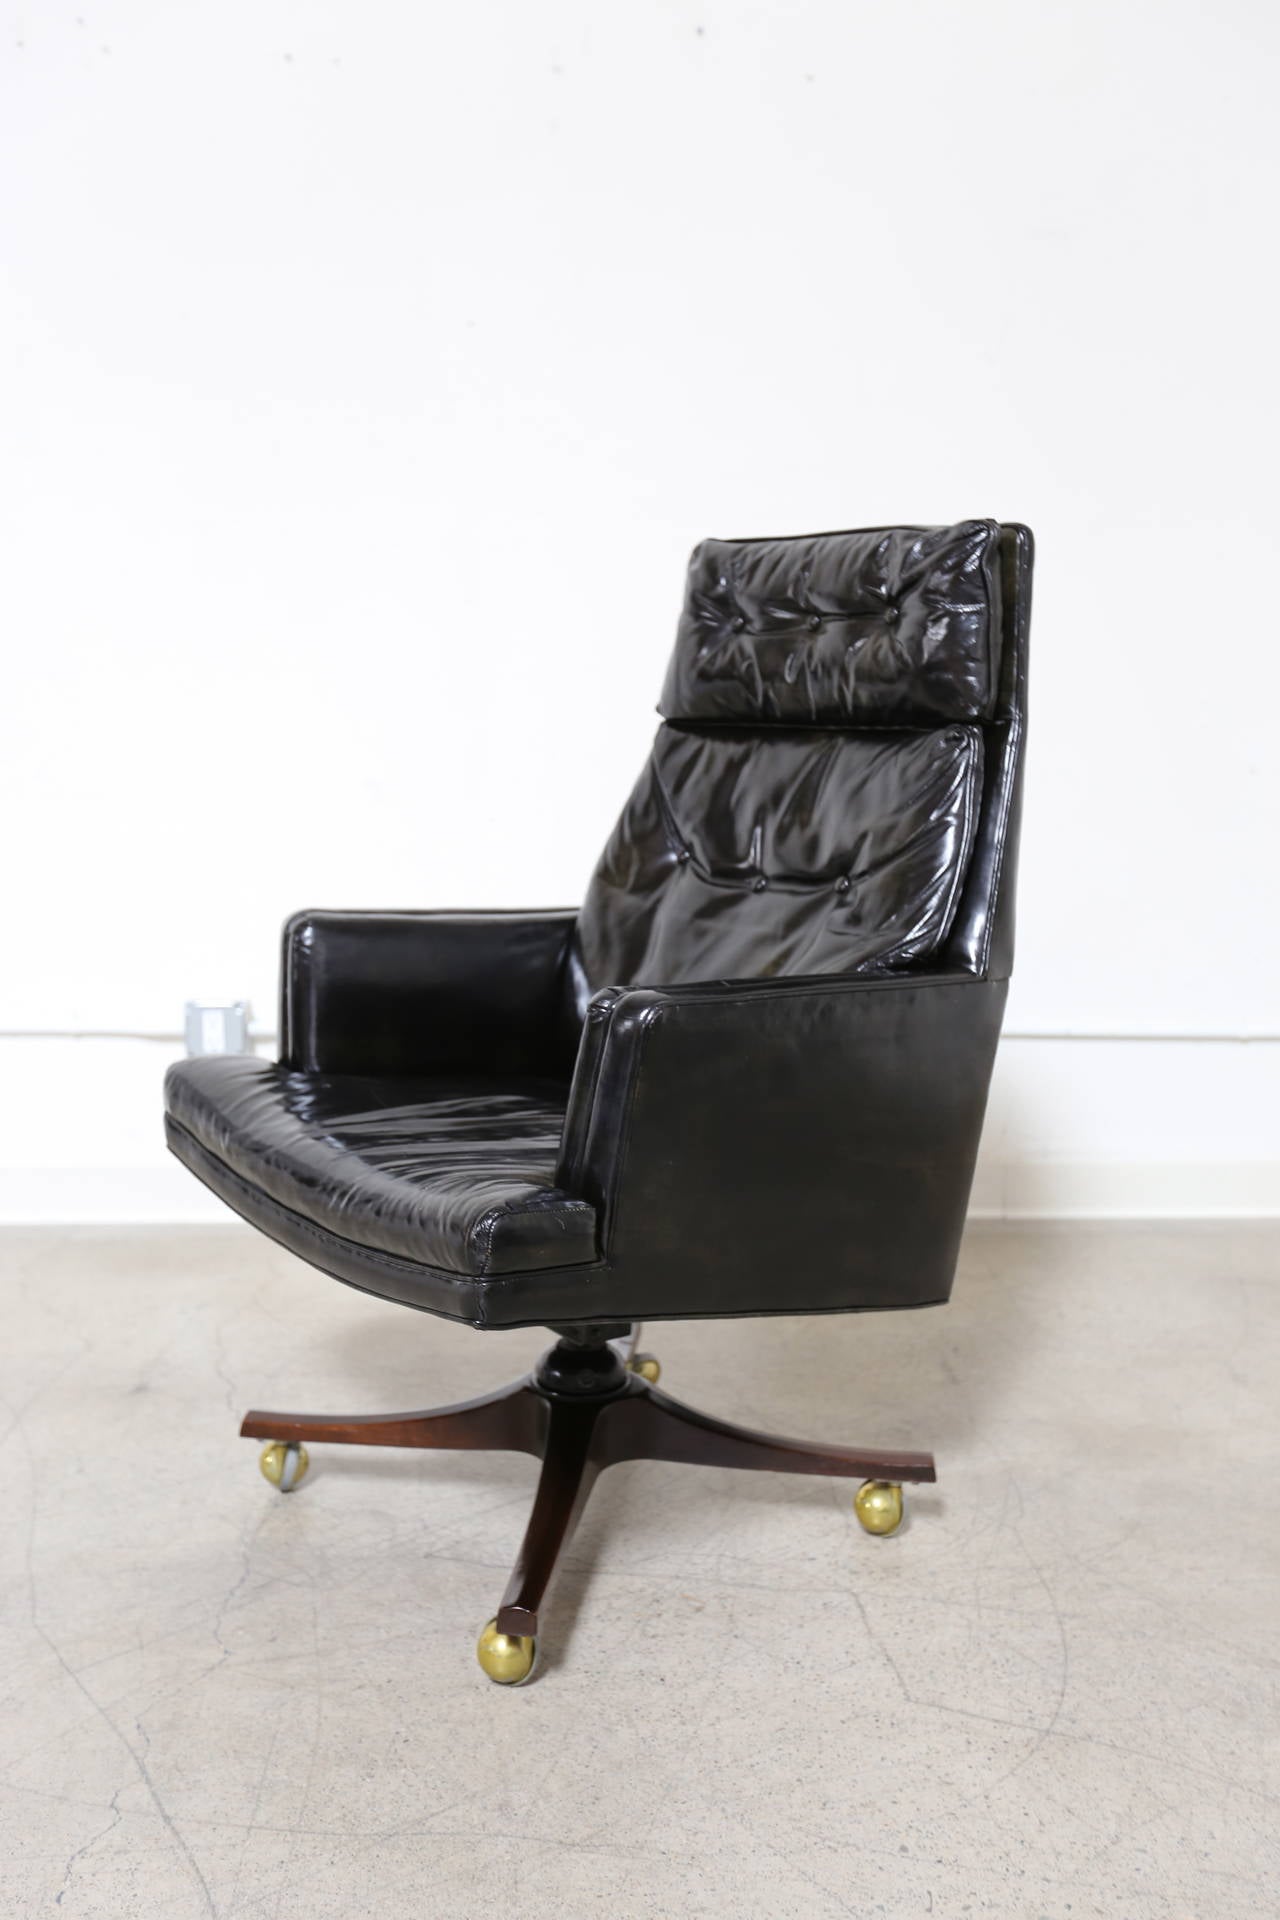 Leather executive desk chair by Edward Wormley for Dunbar.